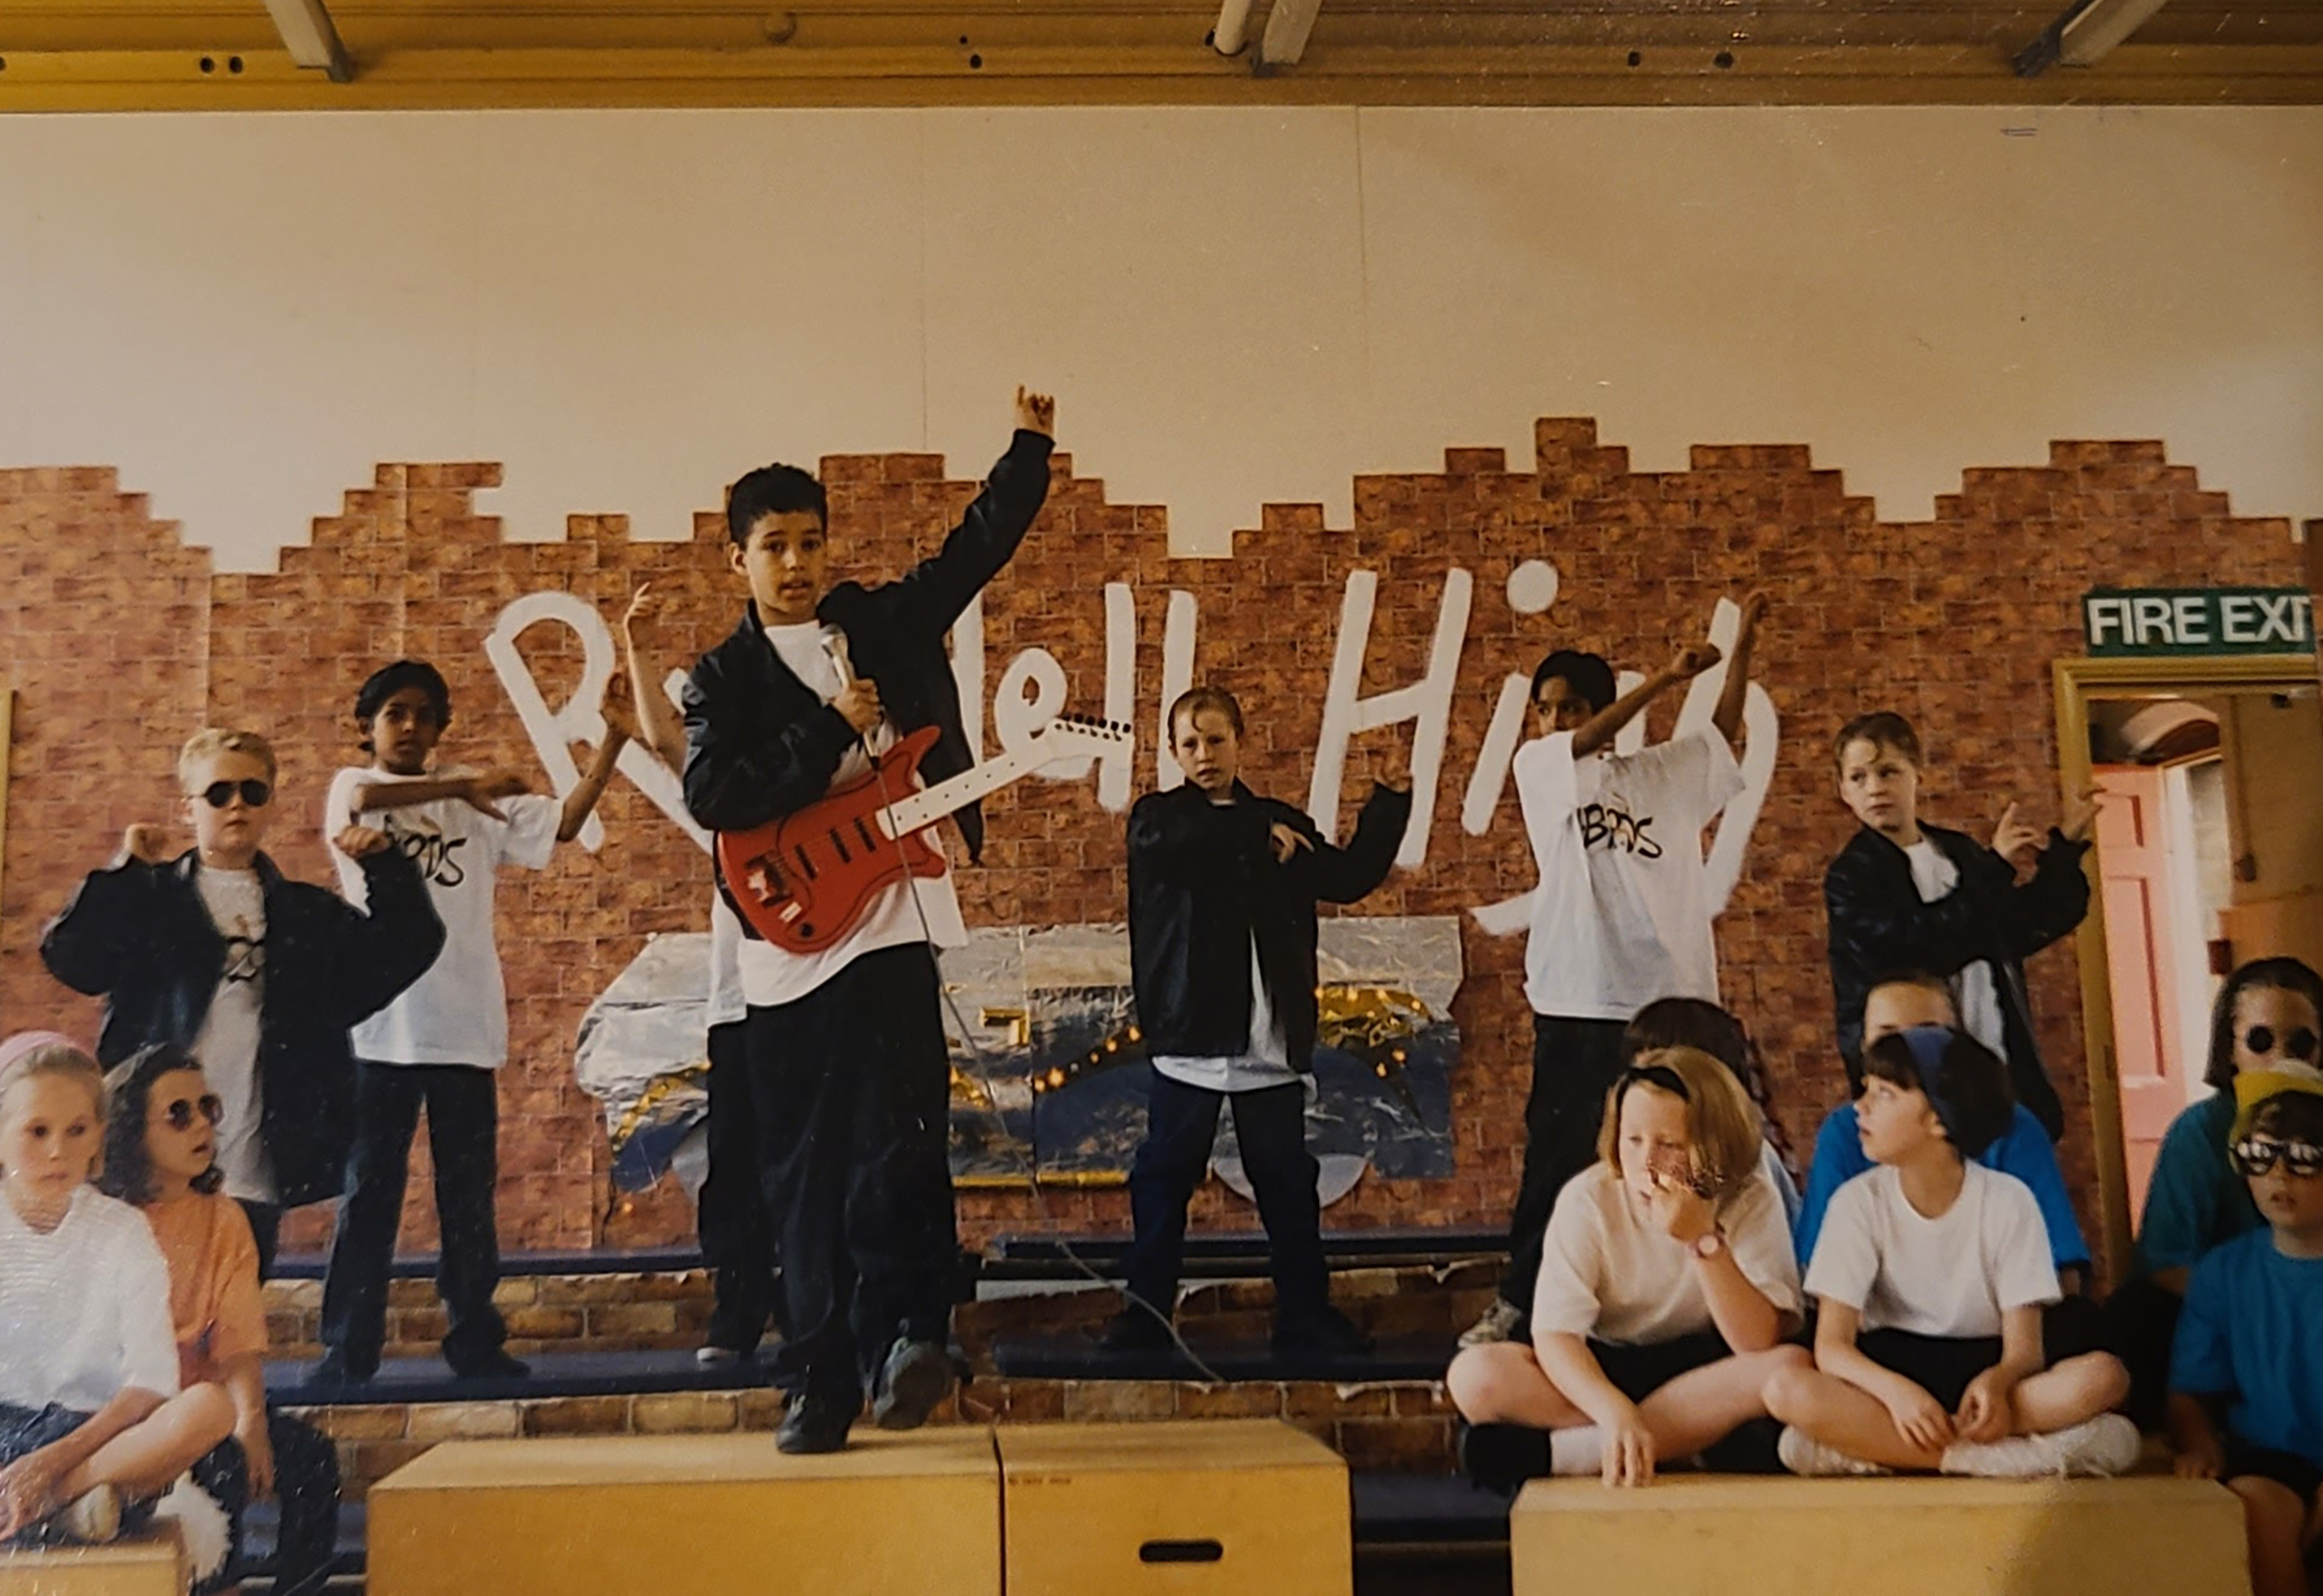 Benjamin Alexander as Kenickie singing Grease Lightning at his primary school's rendition of Grease in 1993 in Wellingborough, England. (Courtesy Benjamin Alexander)